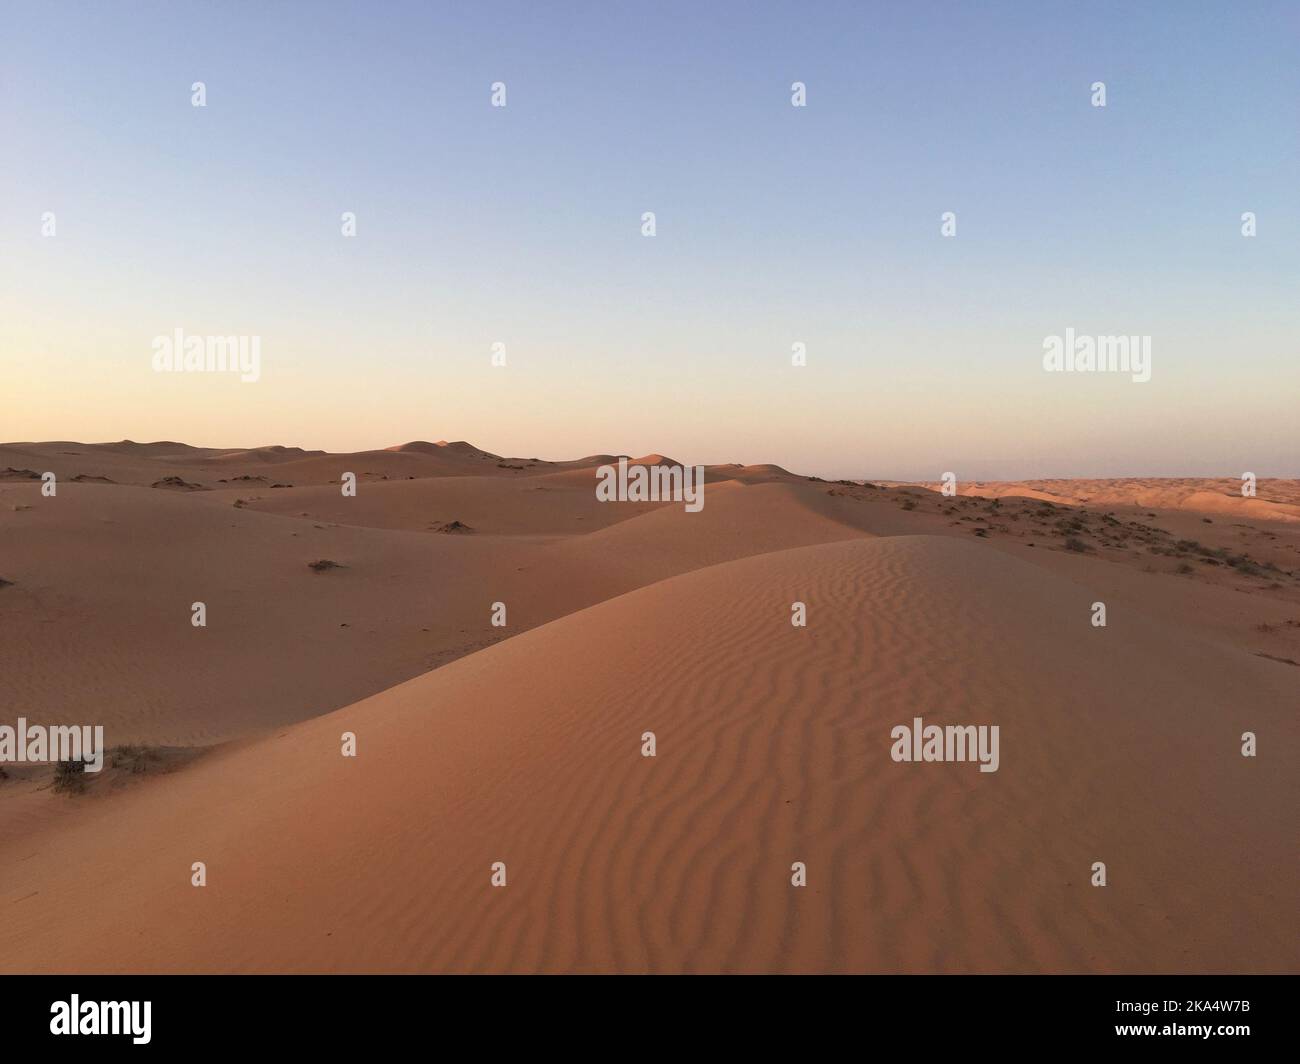 Sand dunes in desert landscape at sunset, Wahiba Sands, Oman Stock Photo